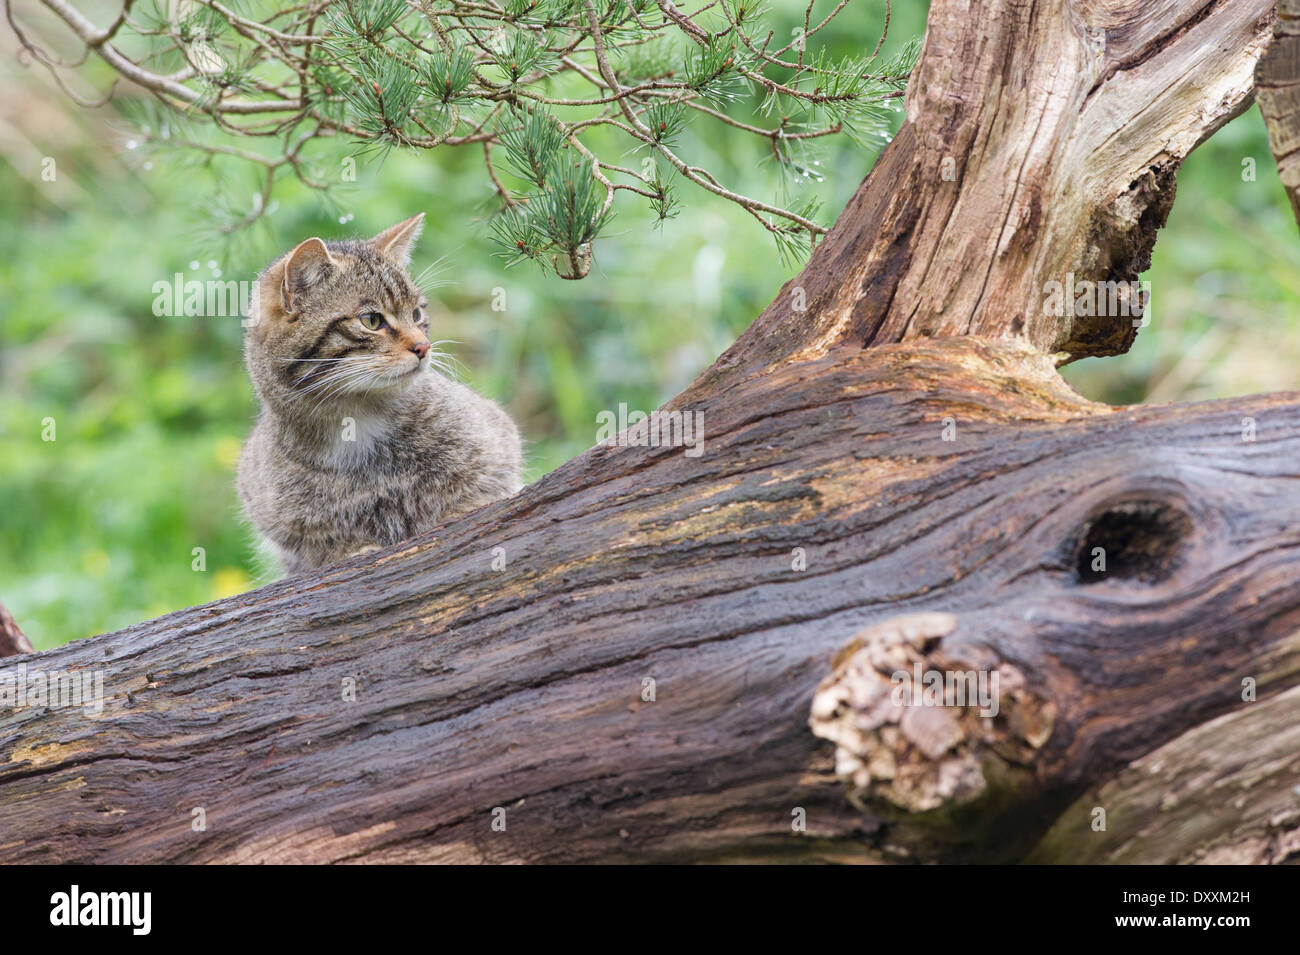 Scottish Wildcat (Felis silvestris grampia) Banque D'Images